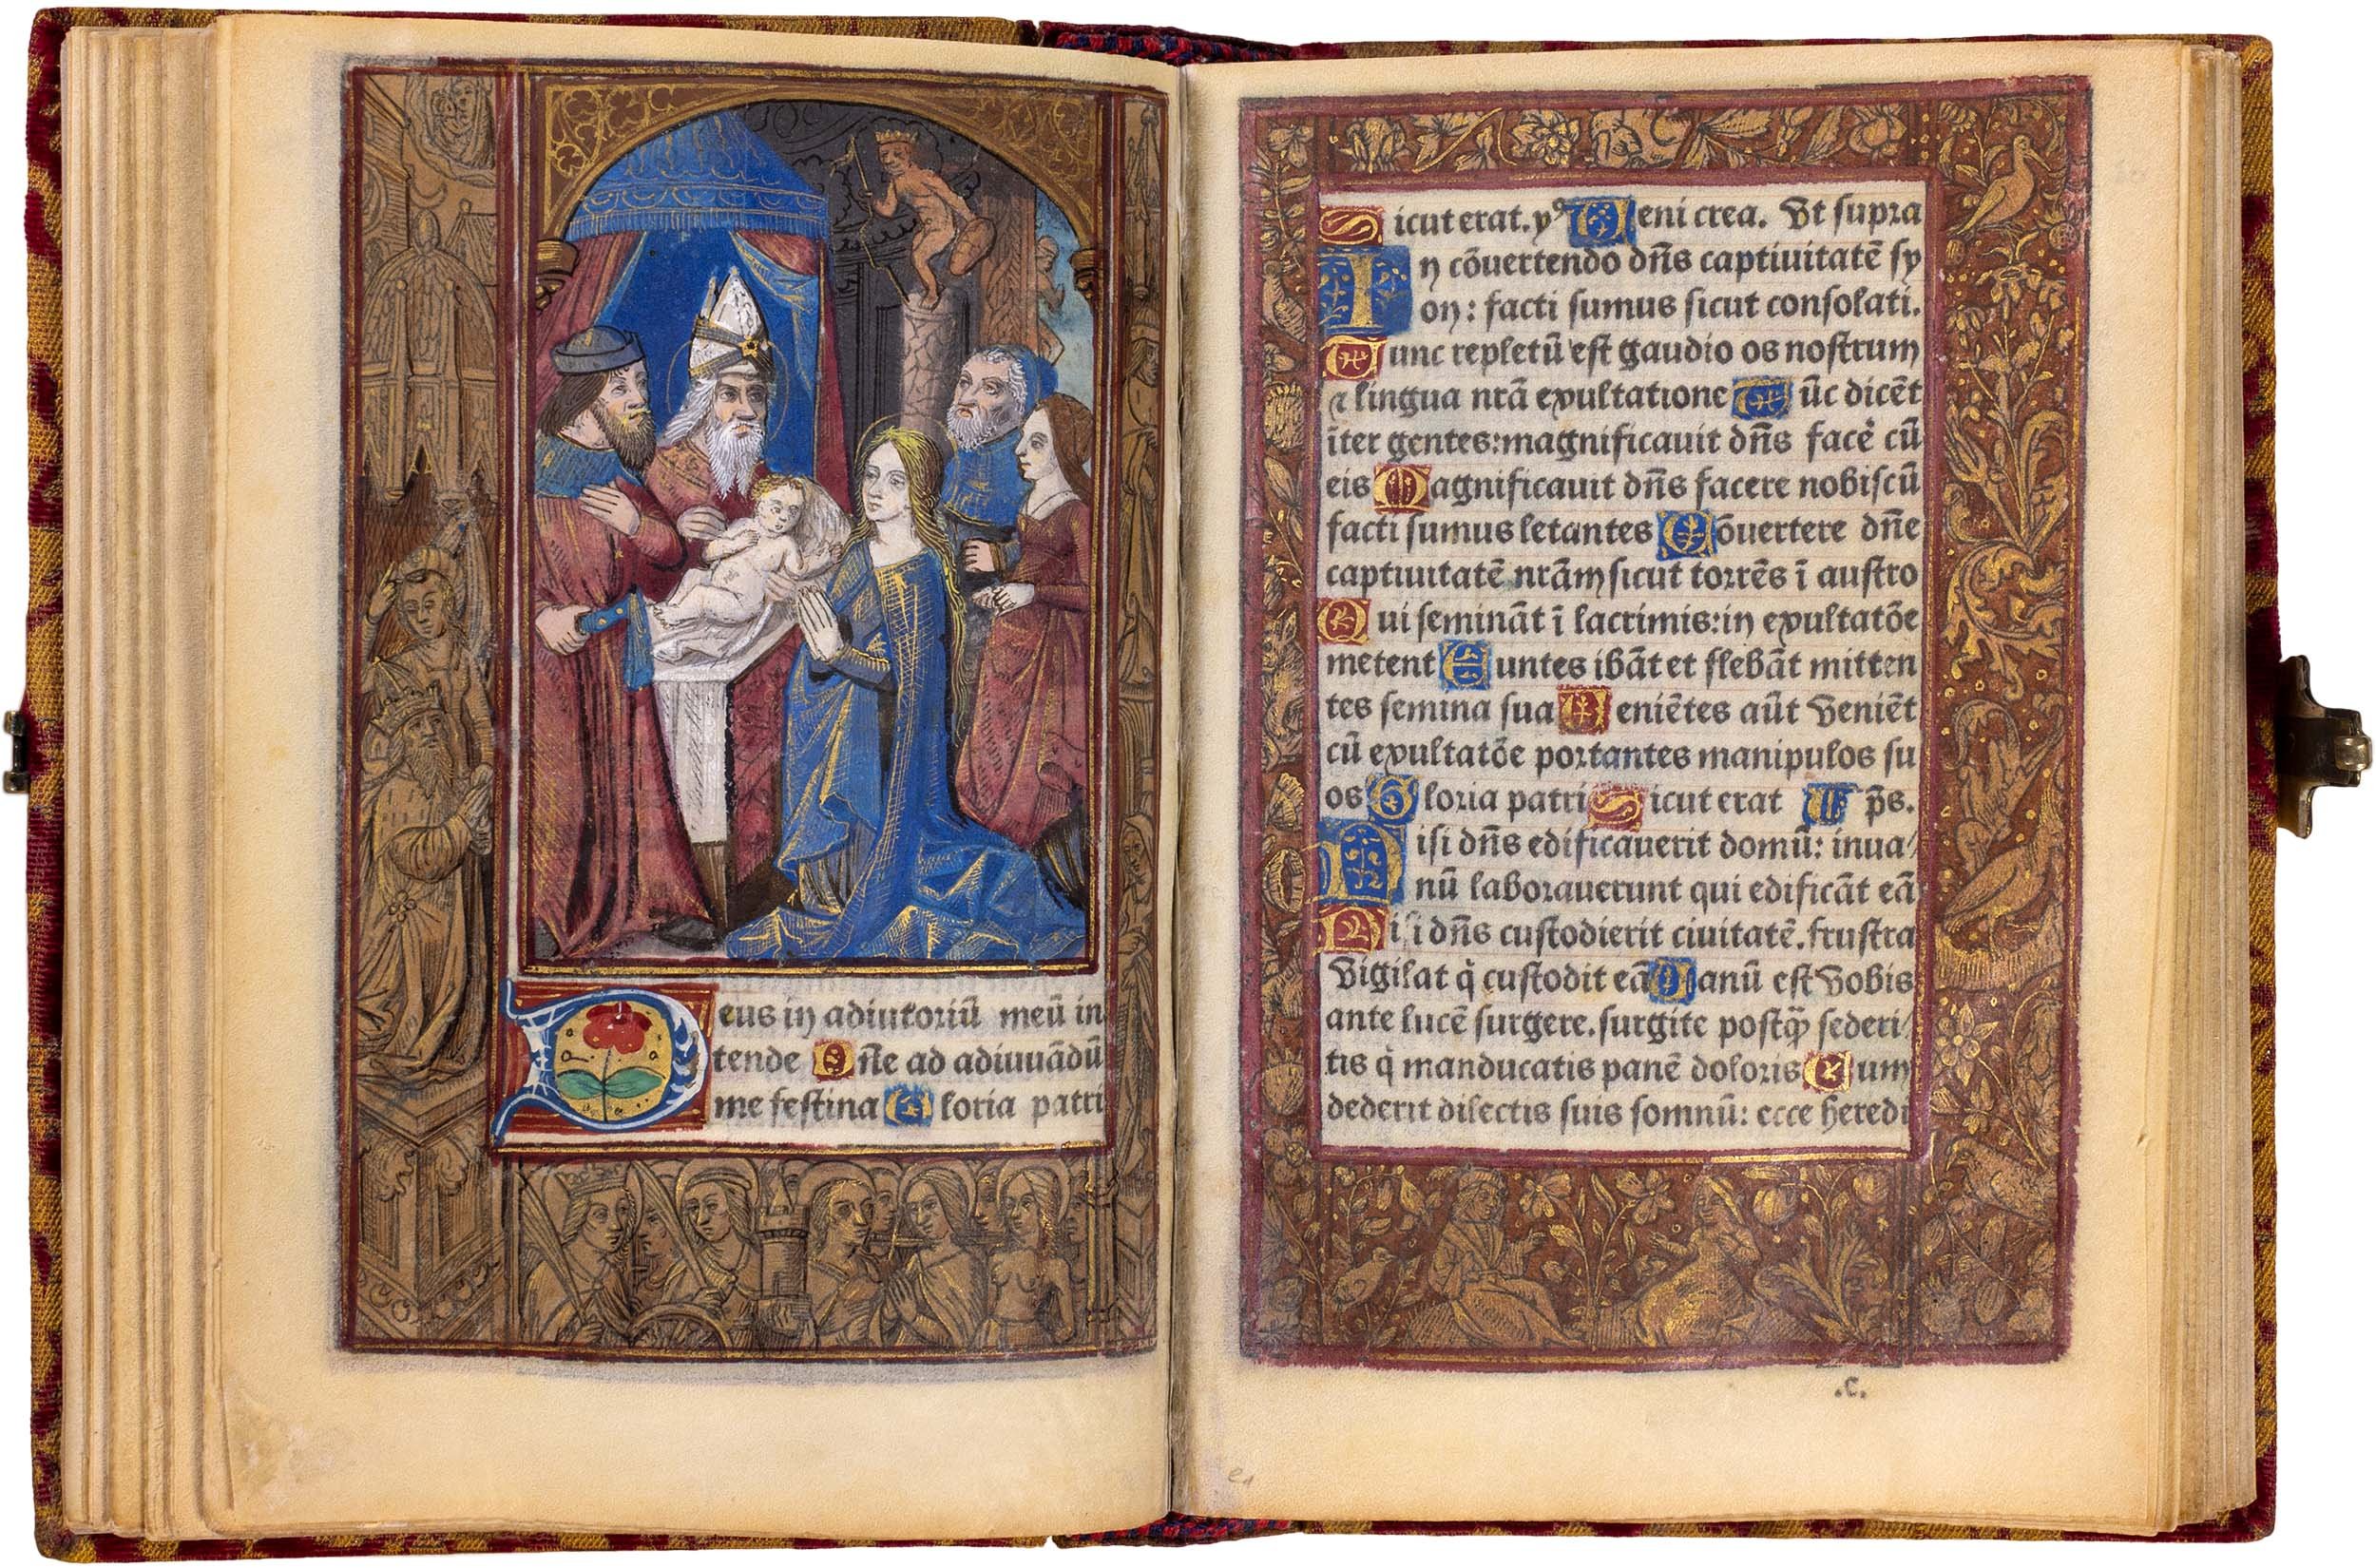 Horae-bmv-1488-gamma-dupre-printed-book-of-hours-danse-macabre-camaieu-dor-illuminated-vellum-copy-55.jpg